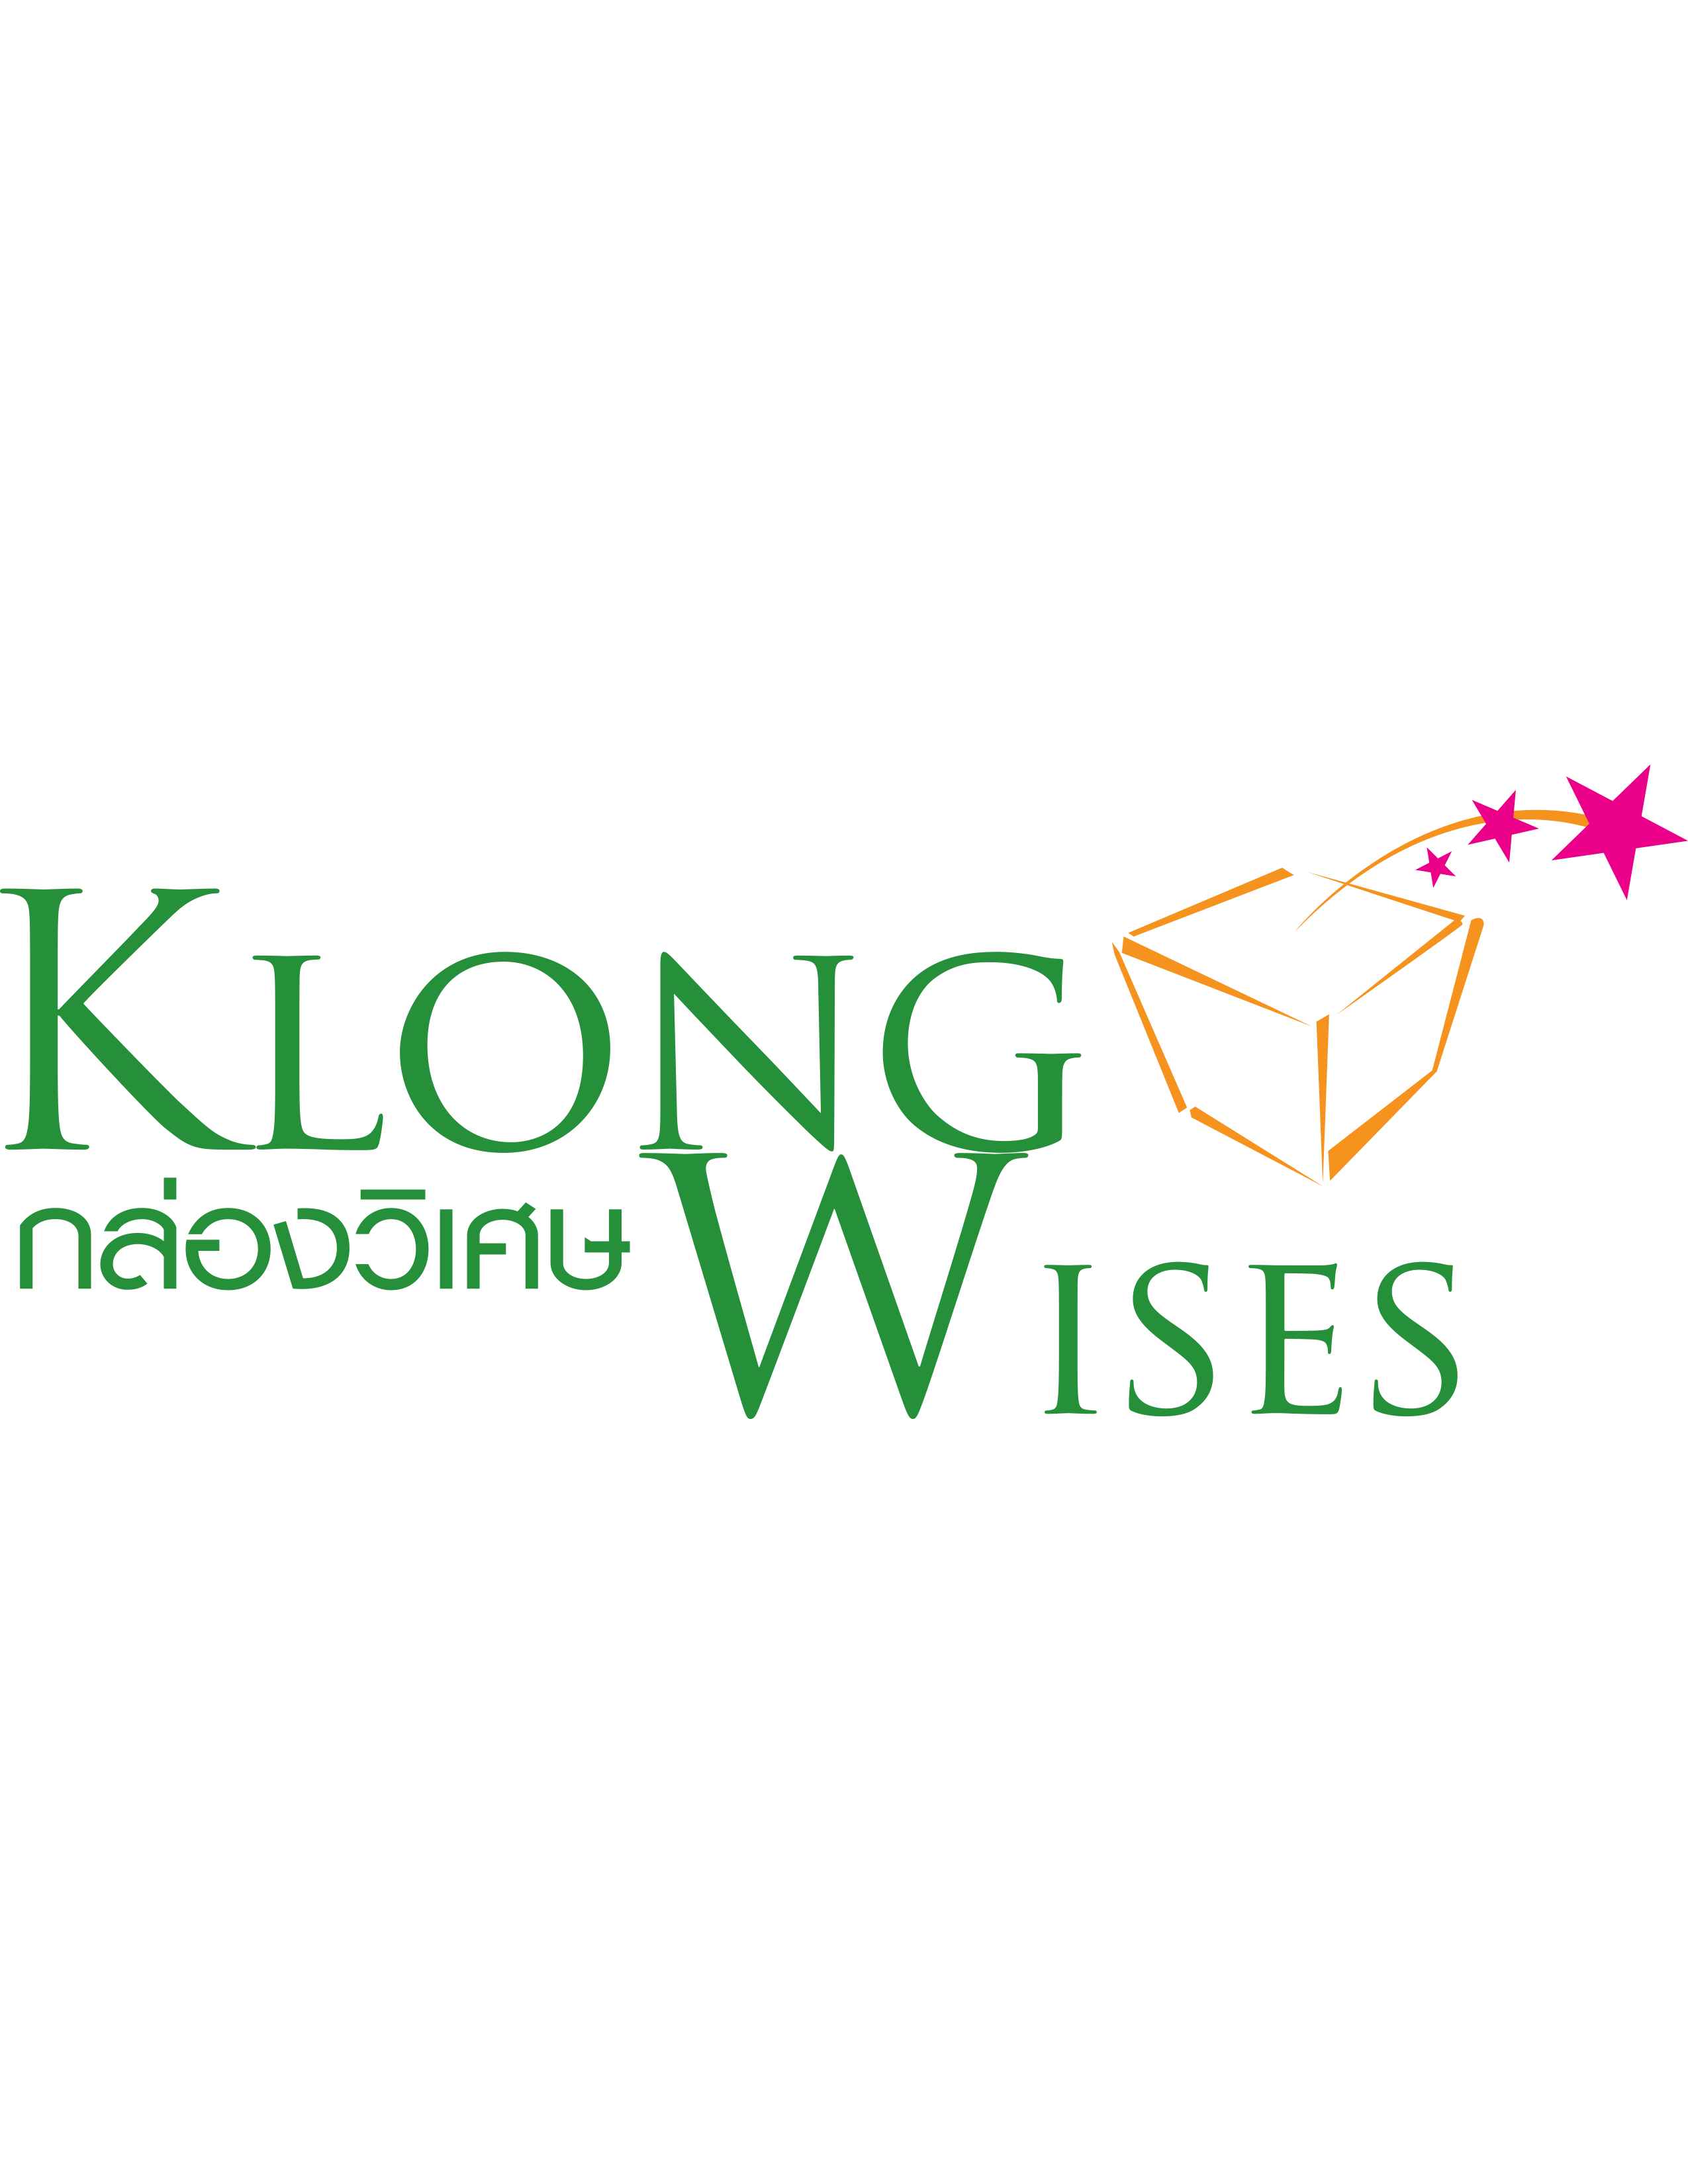 Klongwises (Social Enterprise)